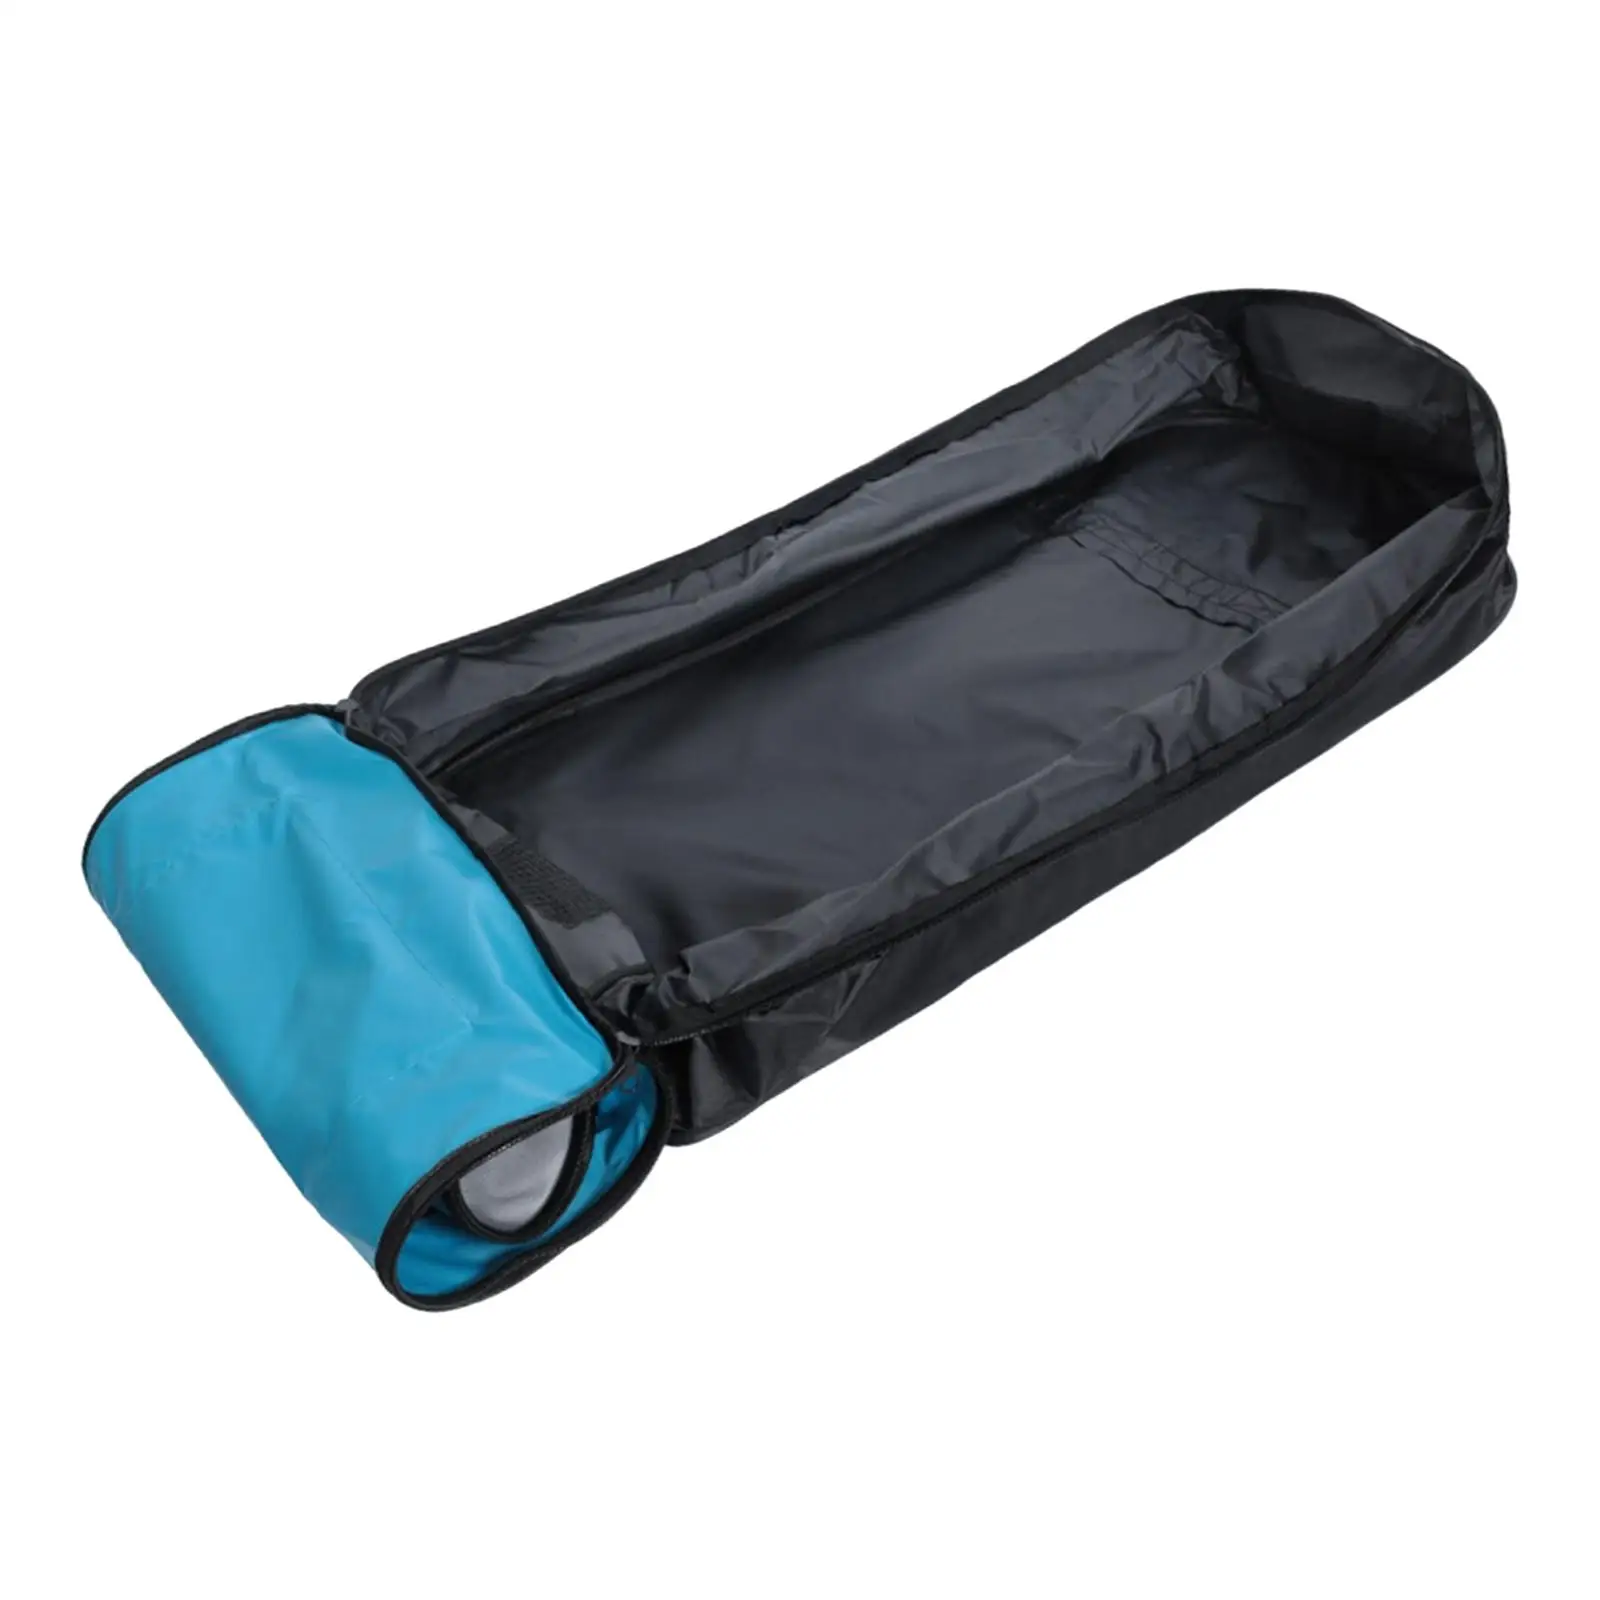 Inflatable Paddle Board Backpack Waterproof Paddle Board Accessories Nylon Stand up Paddle Board Bag for Outdoor Surfboard Kayak